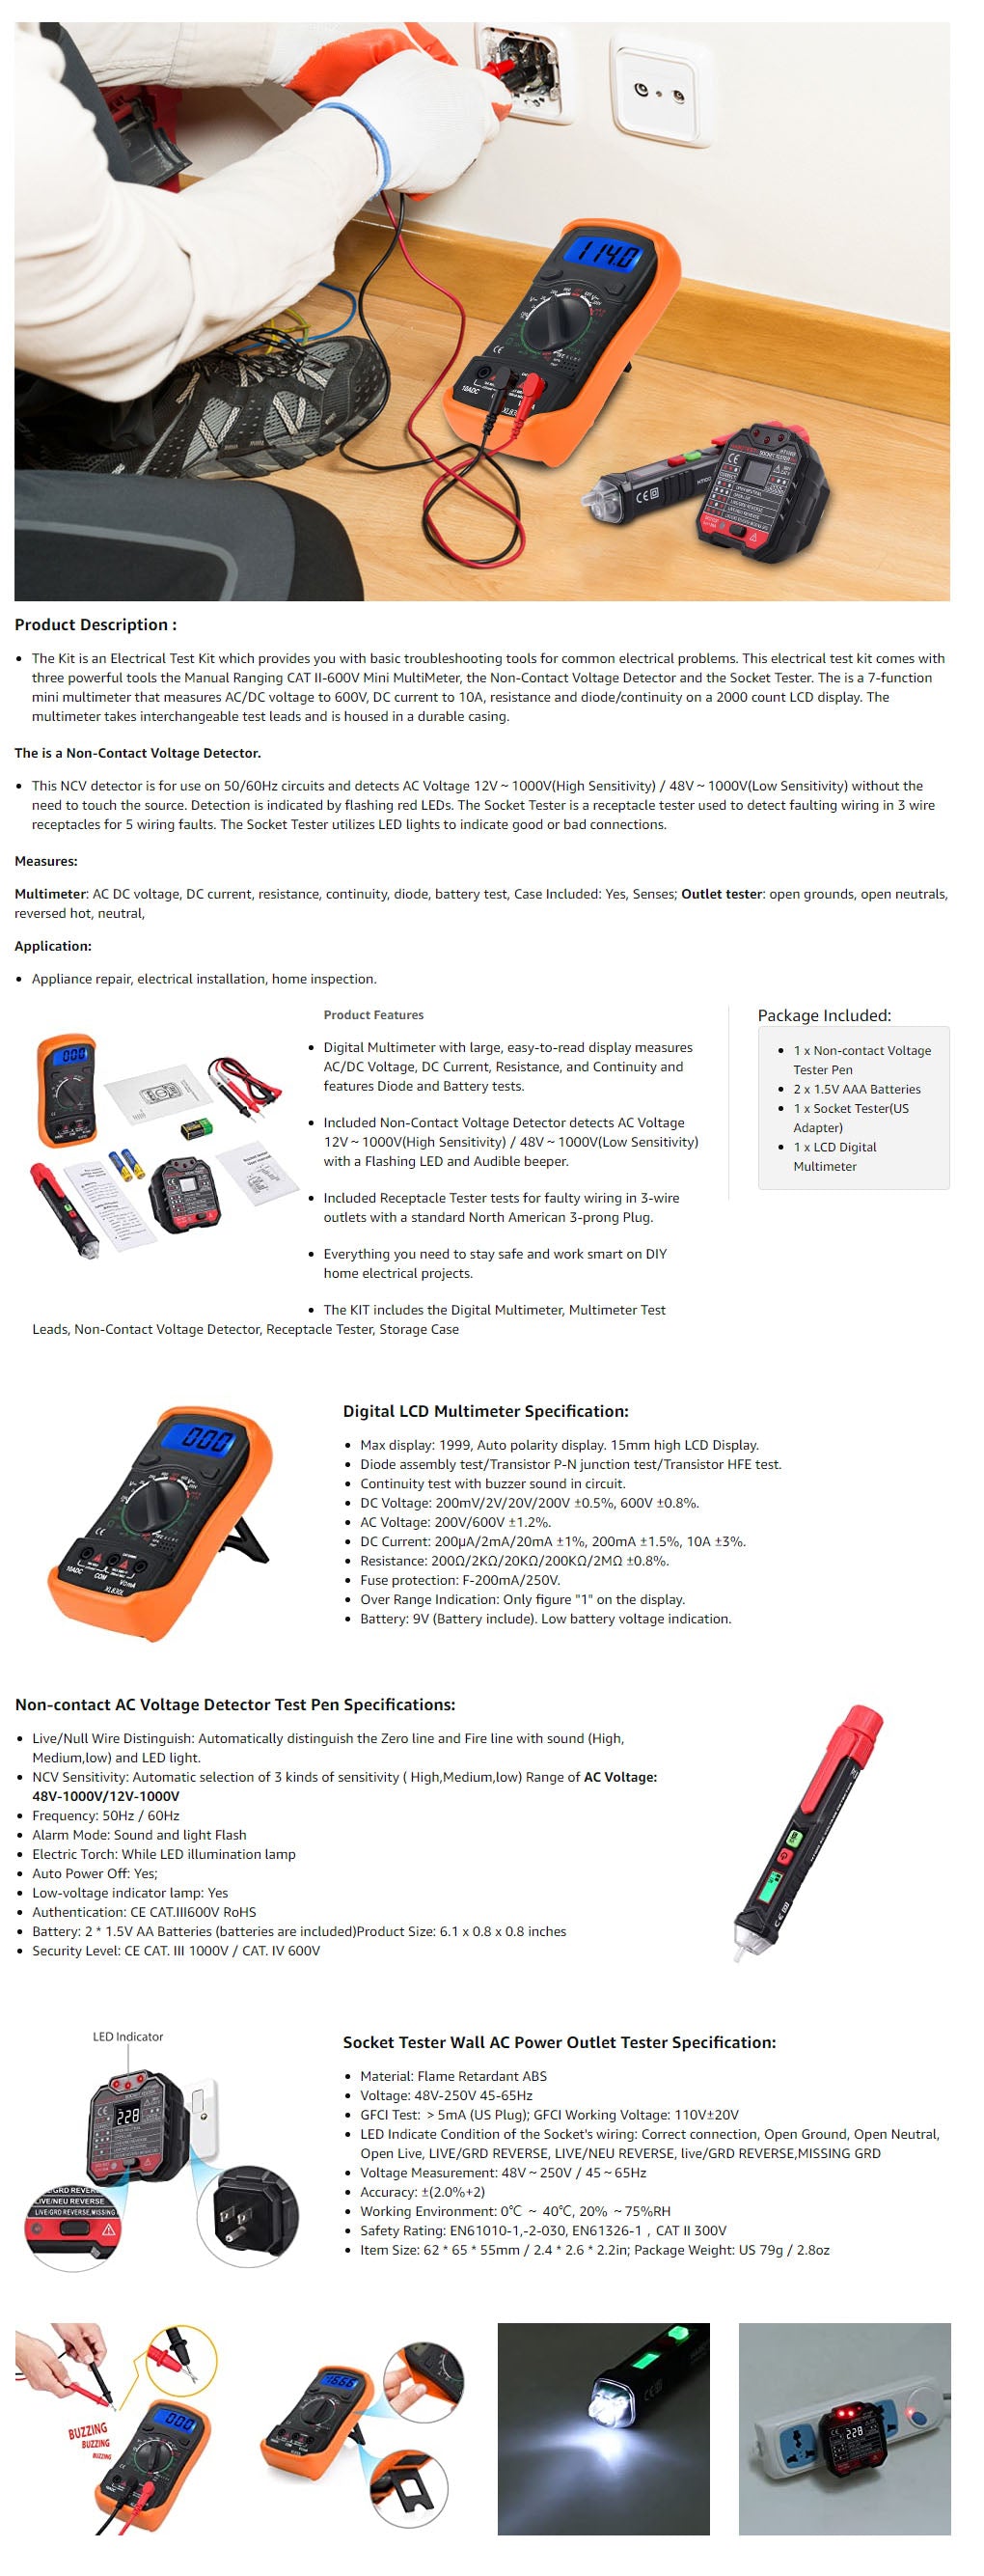 Neoteck Voltage Test Kit Digital Multimeter Non-Contact Voltage Tester Pen and Socket Tester Outlet Tester Electrical Test Kit Voltage Detector with LED Flashlight